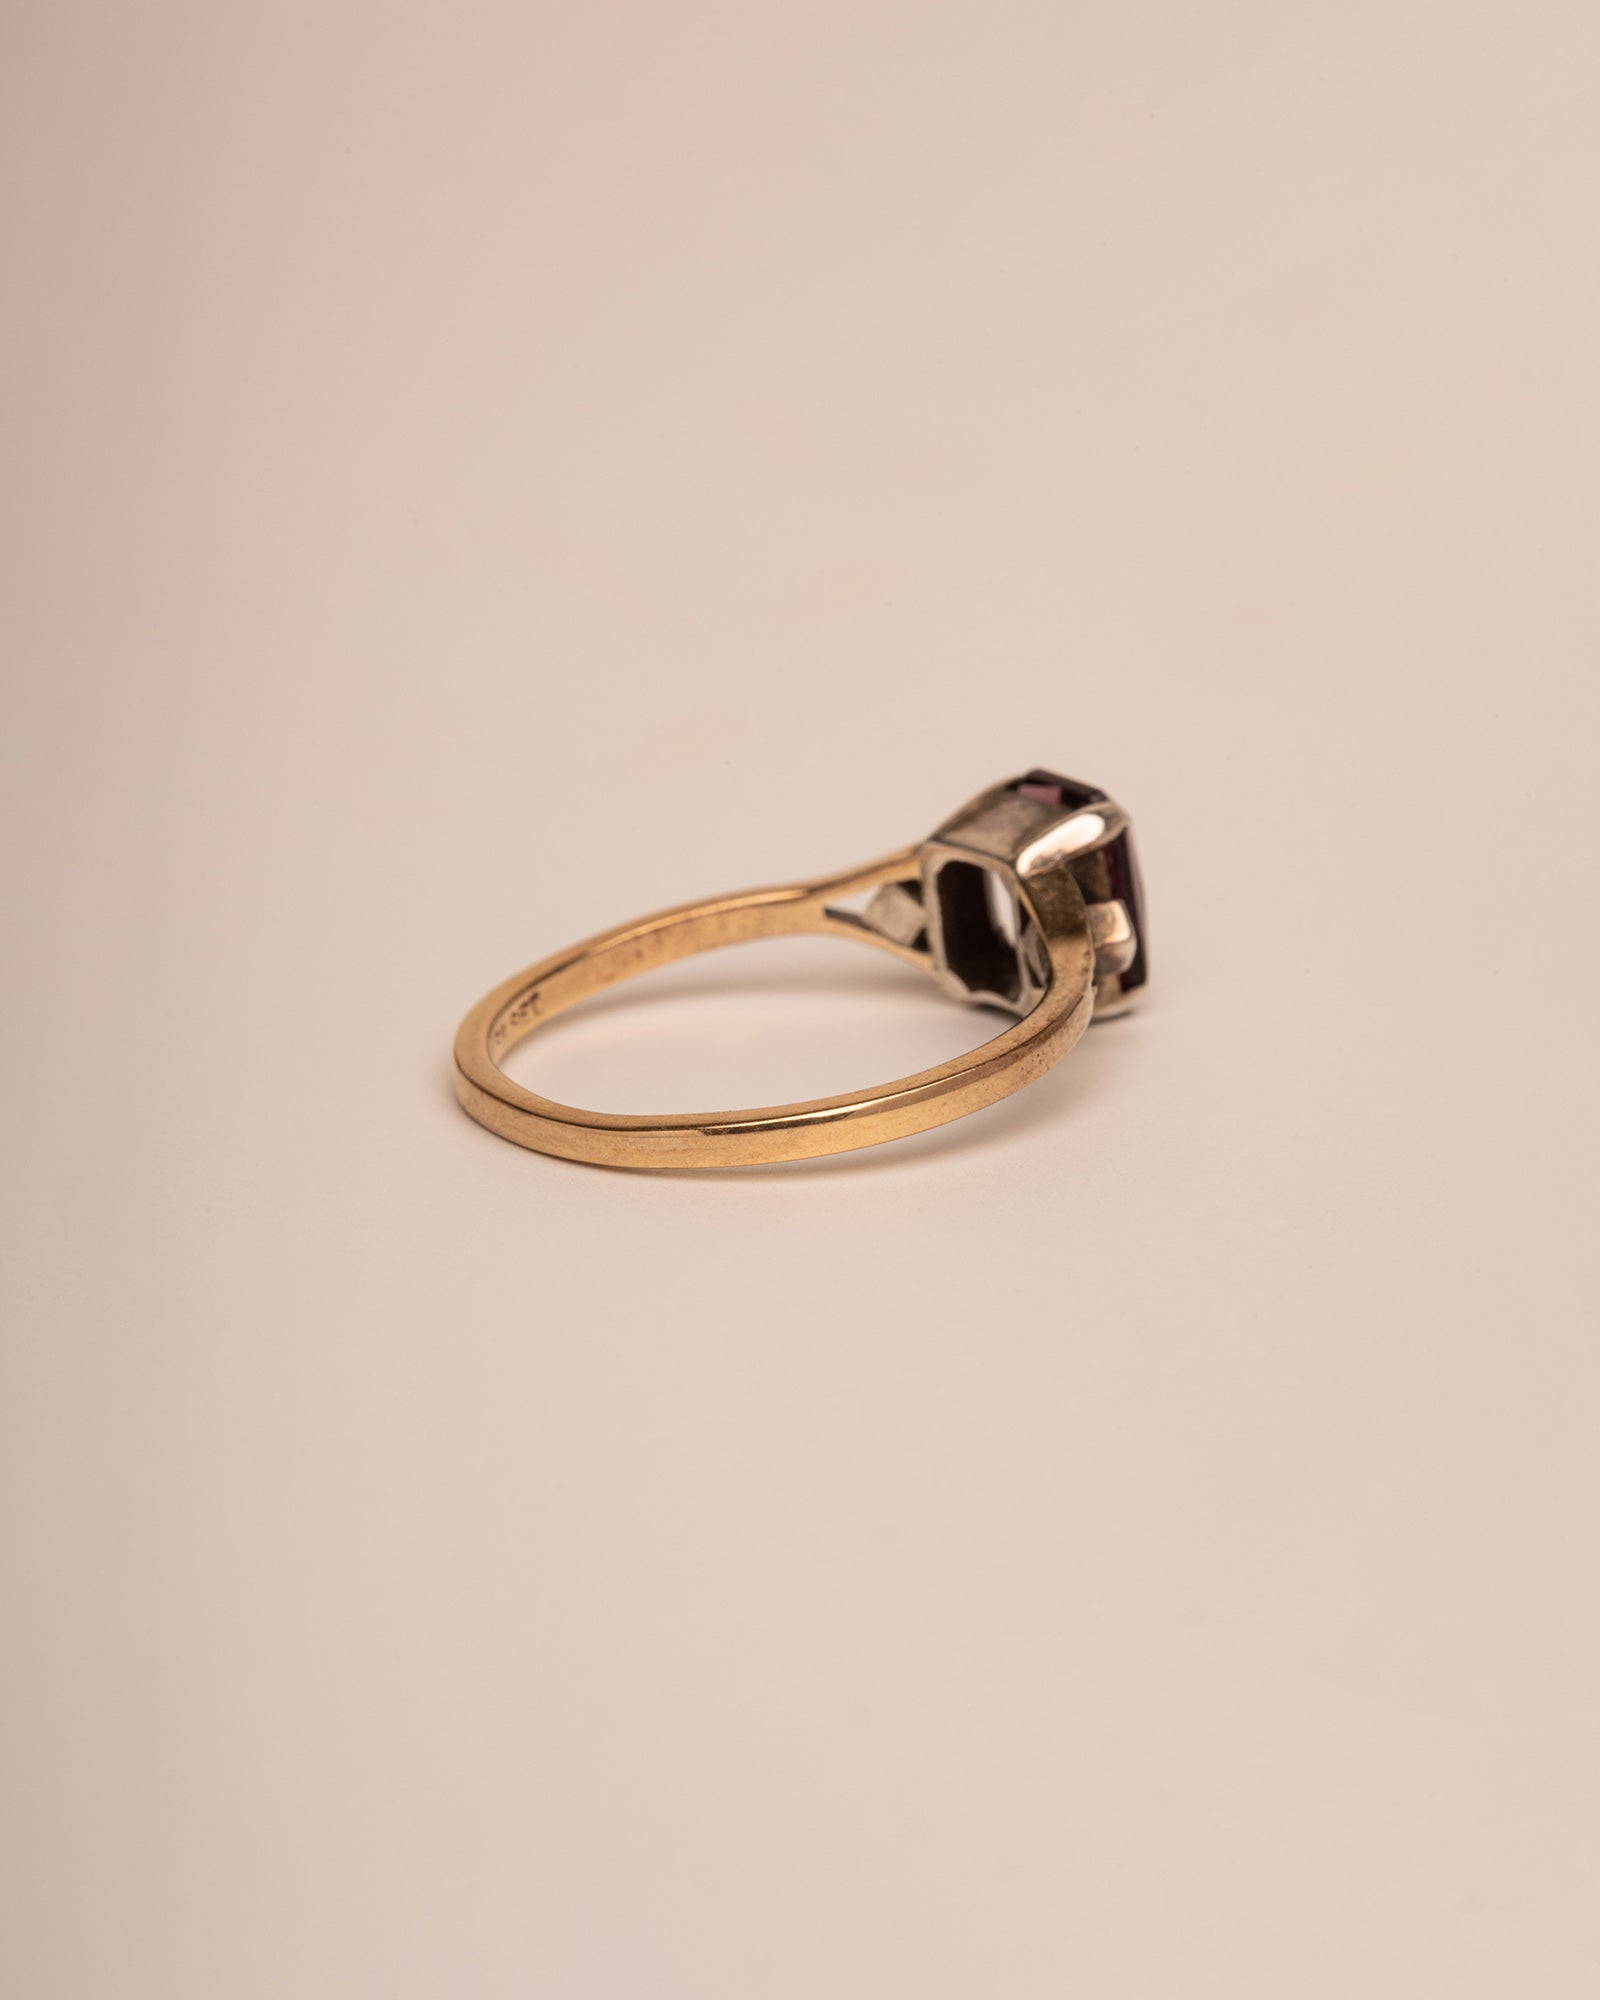 Mavis 9ct Gold Art Deco Ring